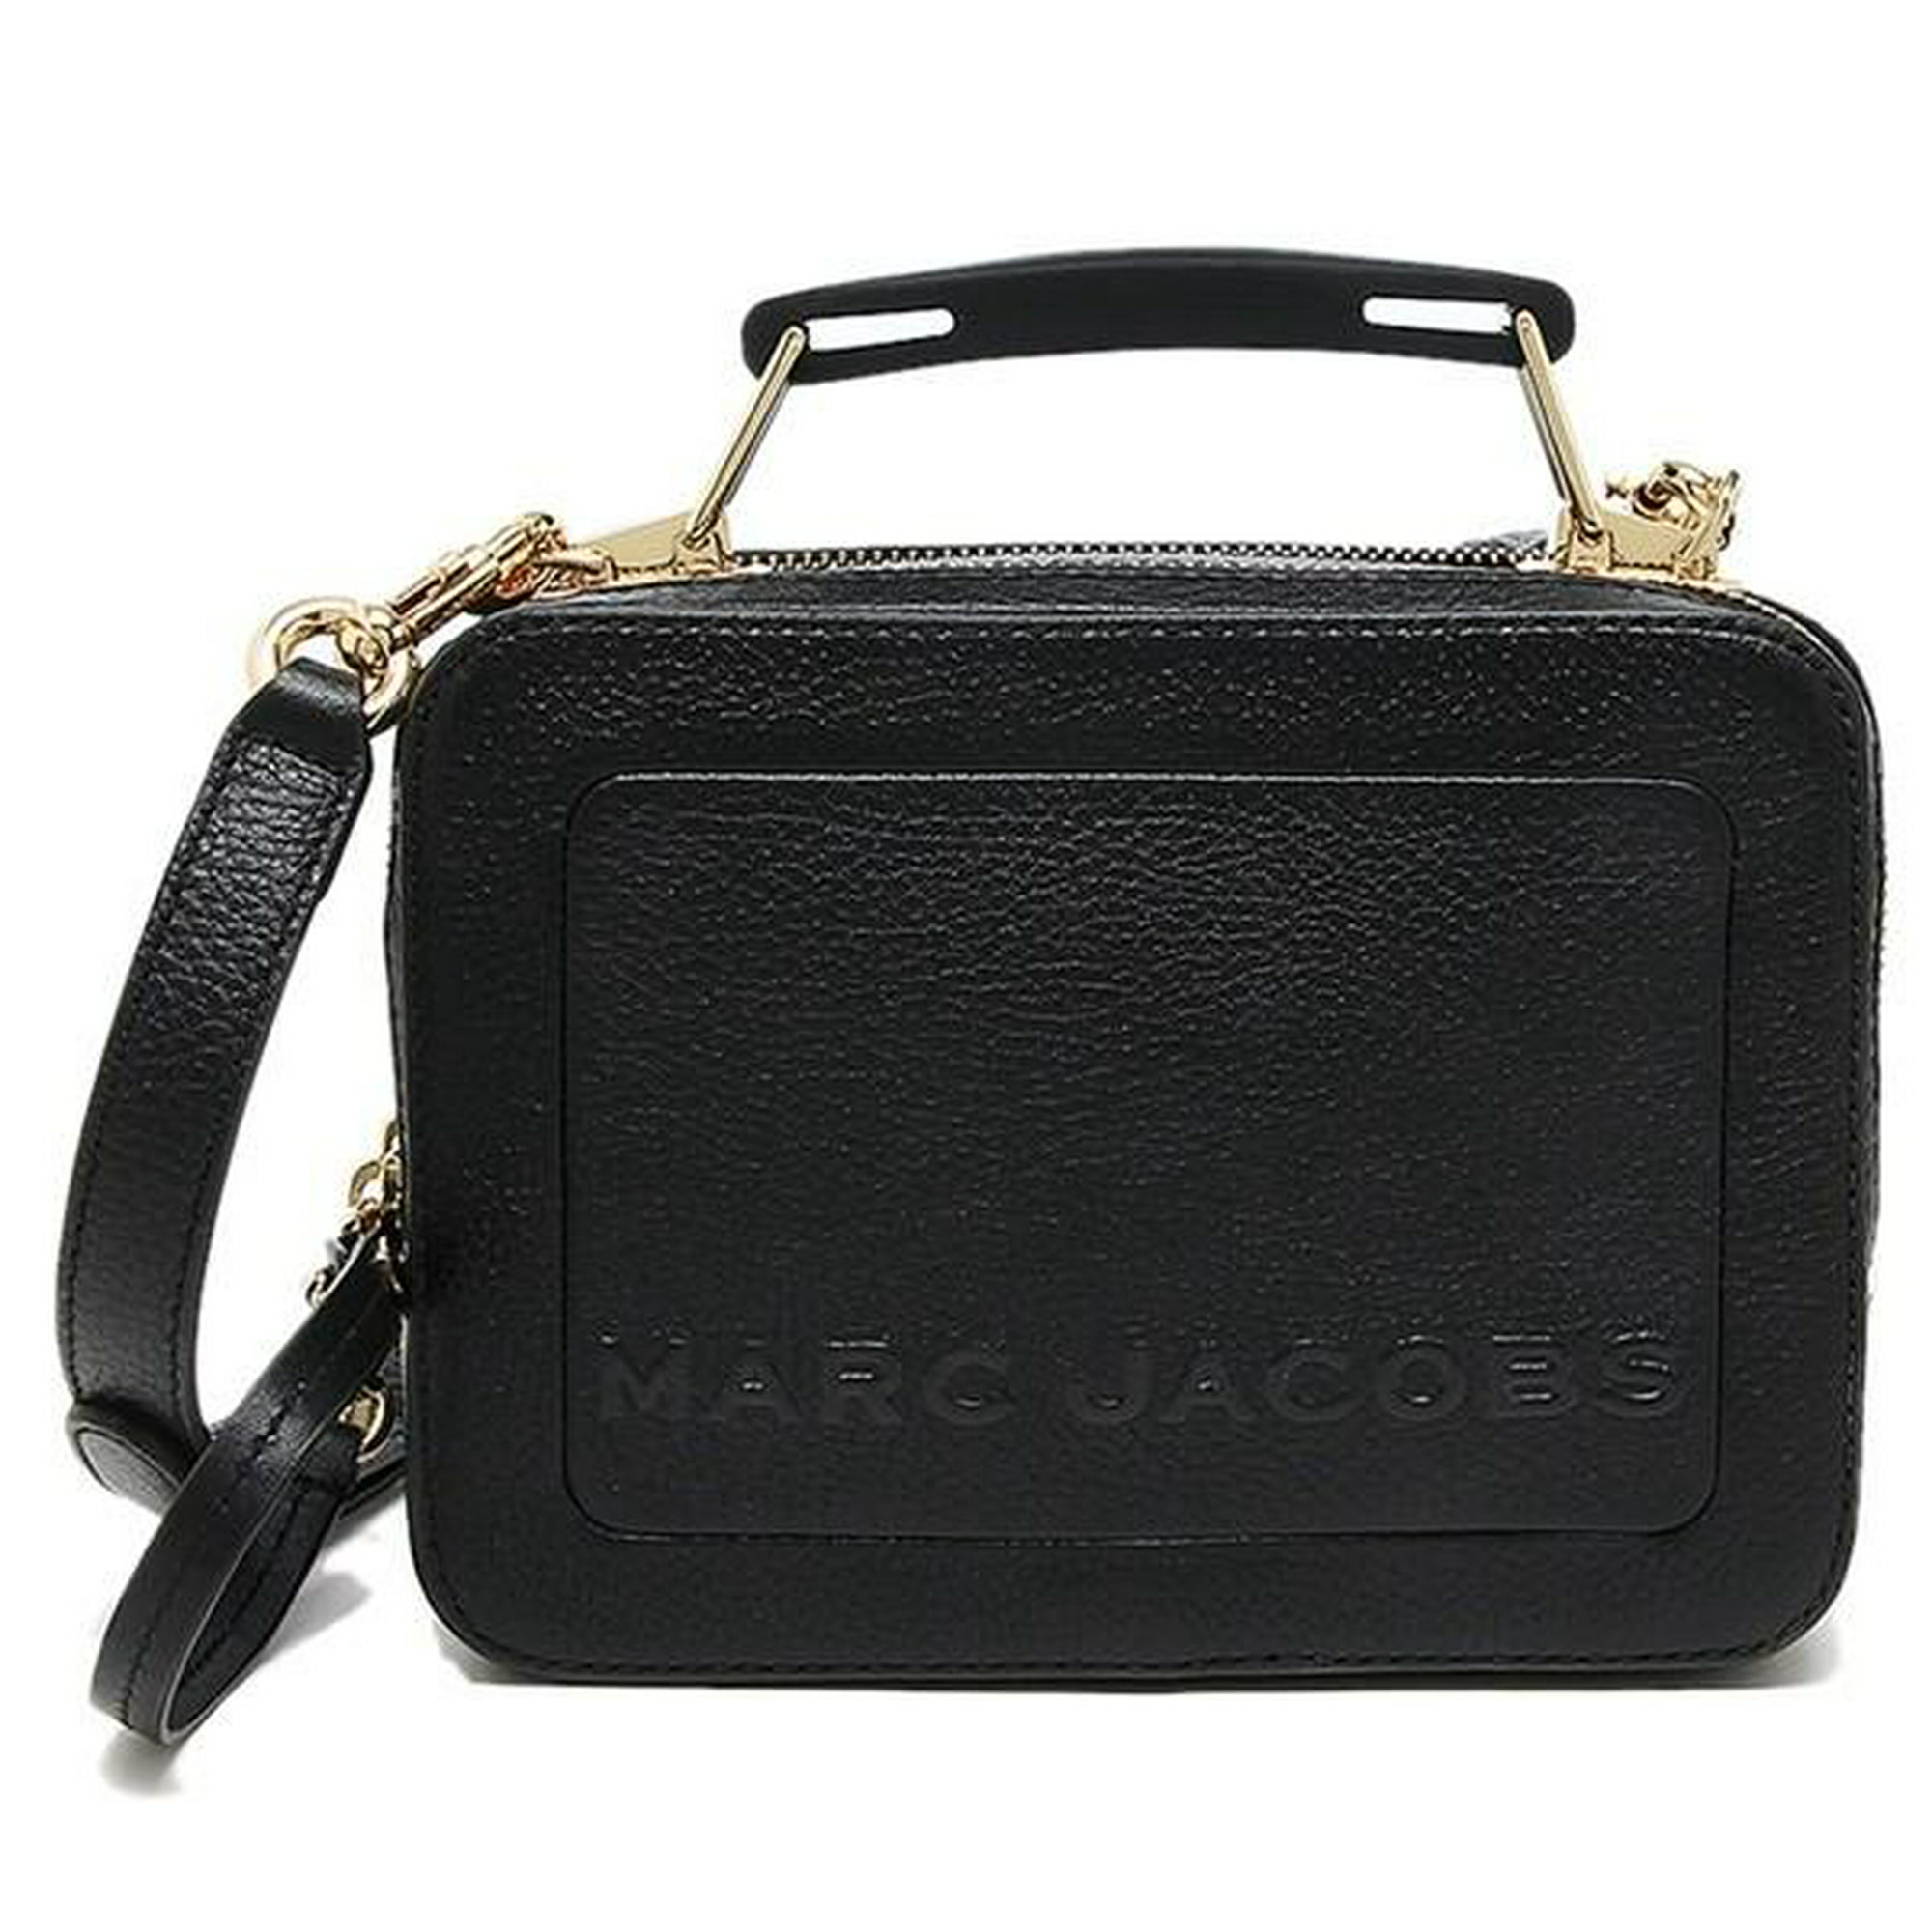 Marc Jacobs The Mini bolso de hombro suave para mujer